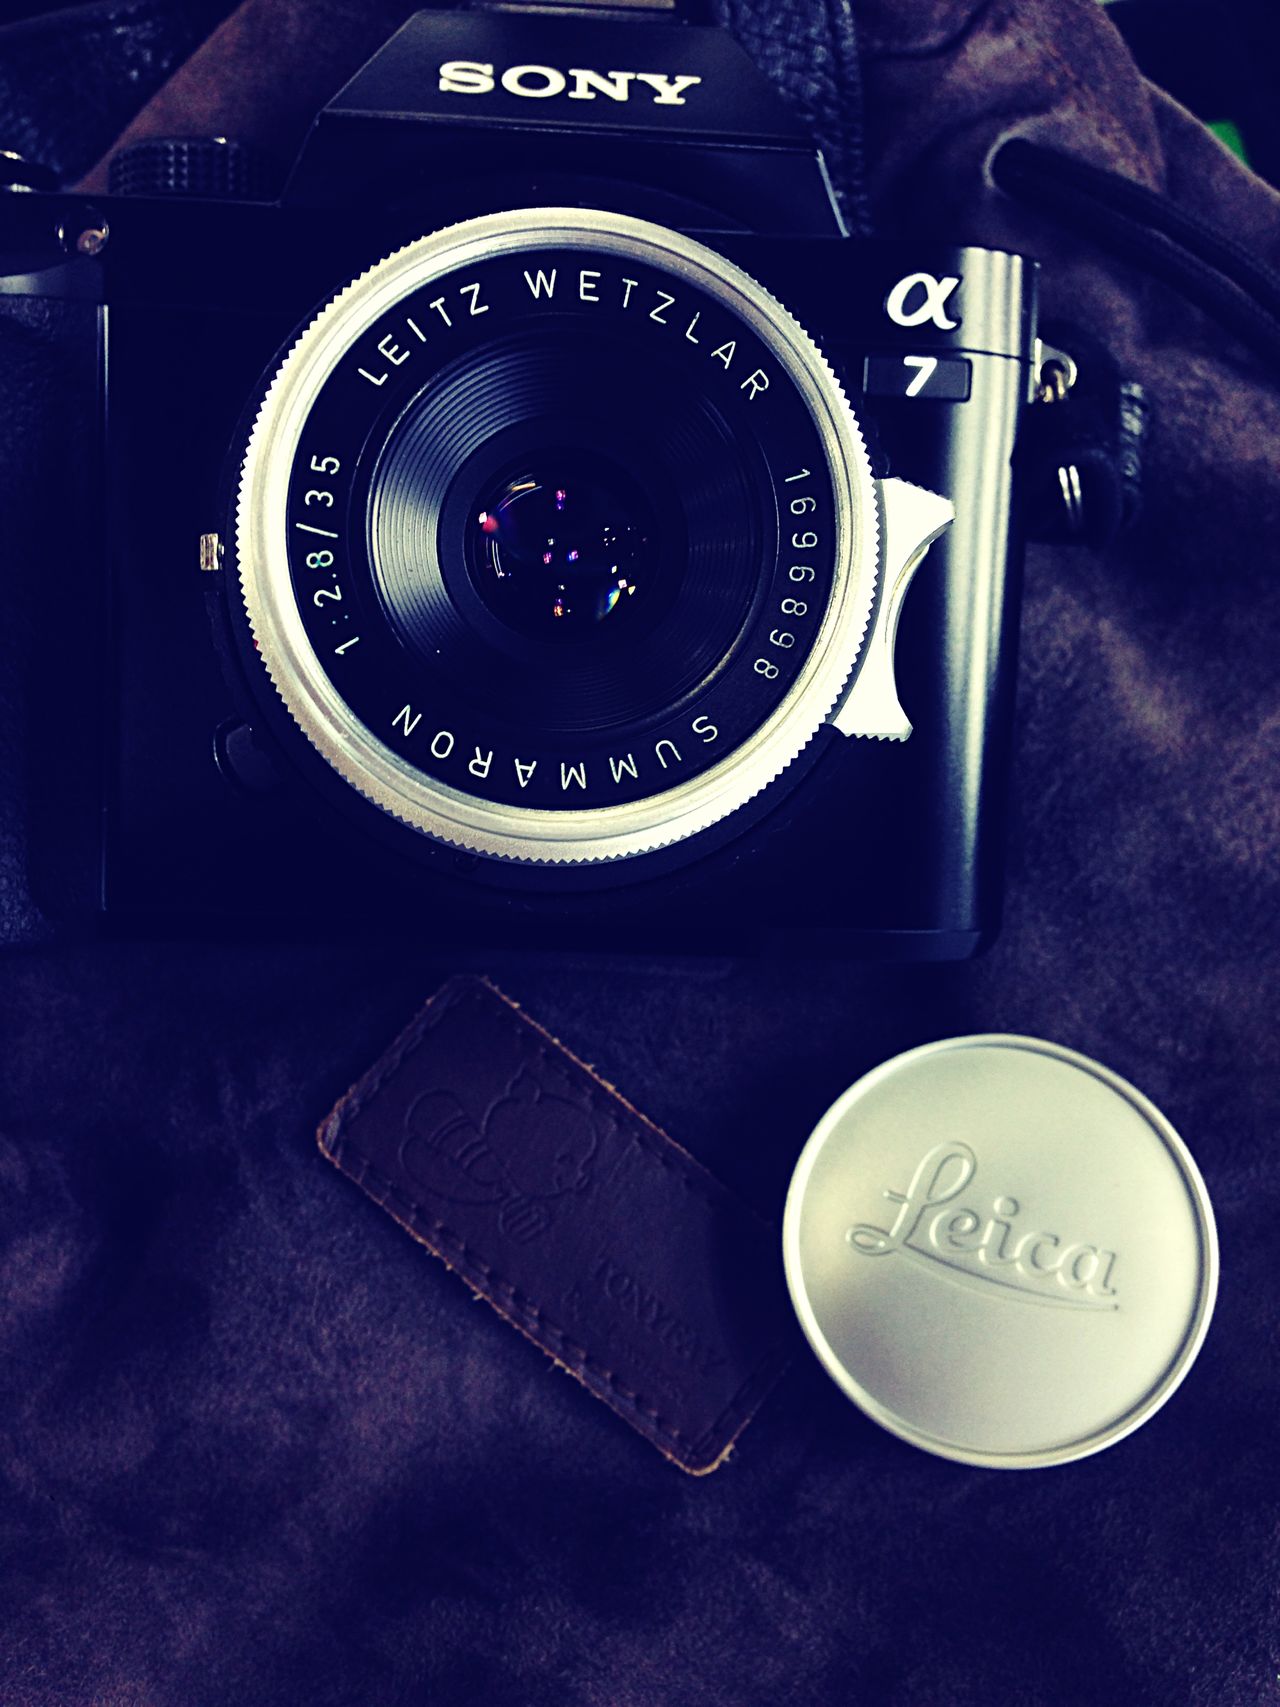 Leica lens